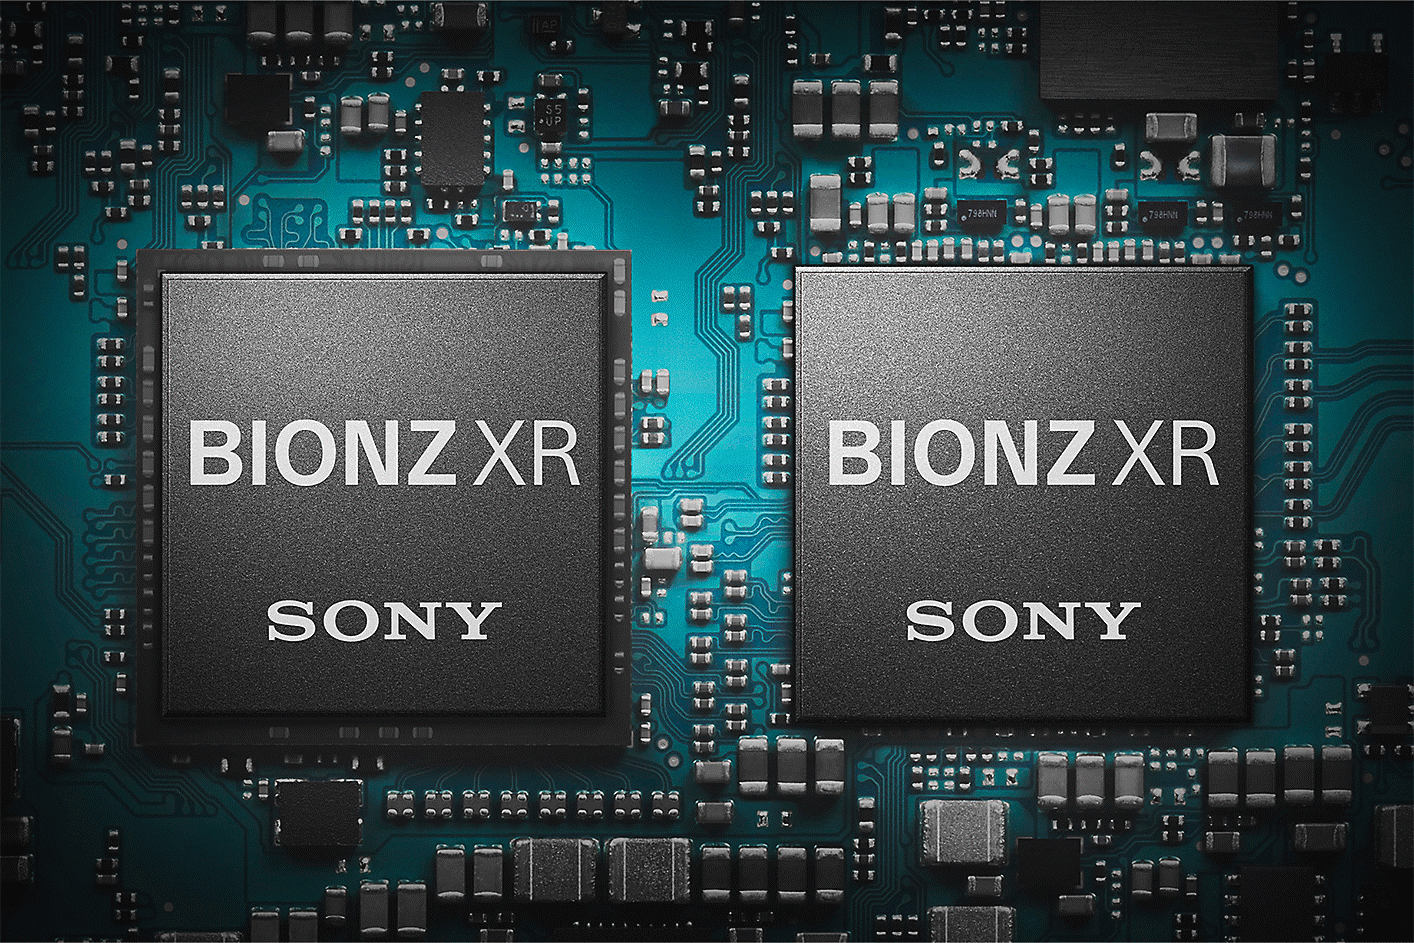 BIONZ XR 이미지 프로세싱 엔진의 사진